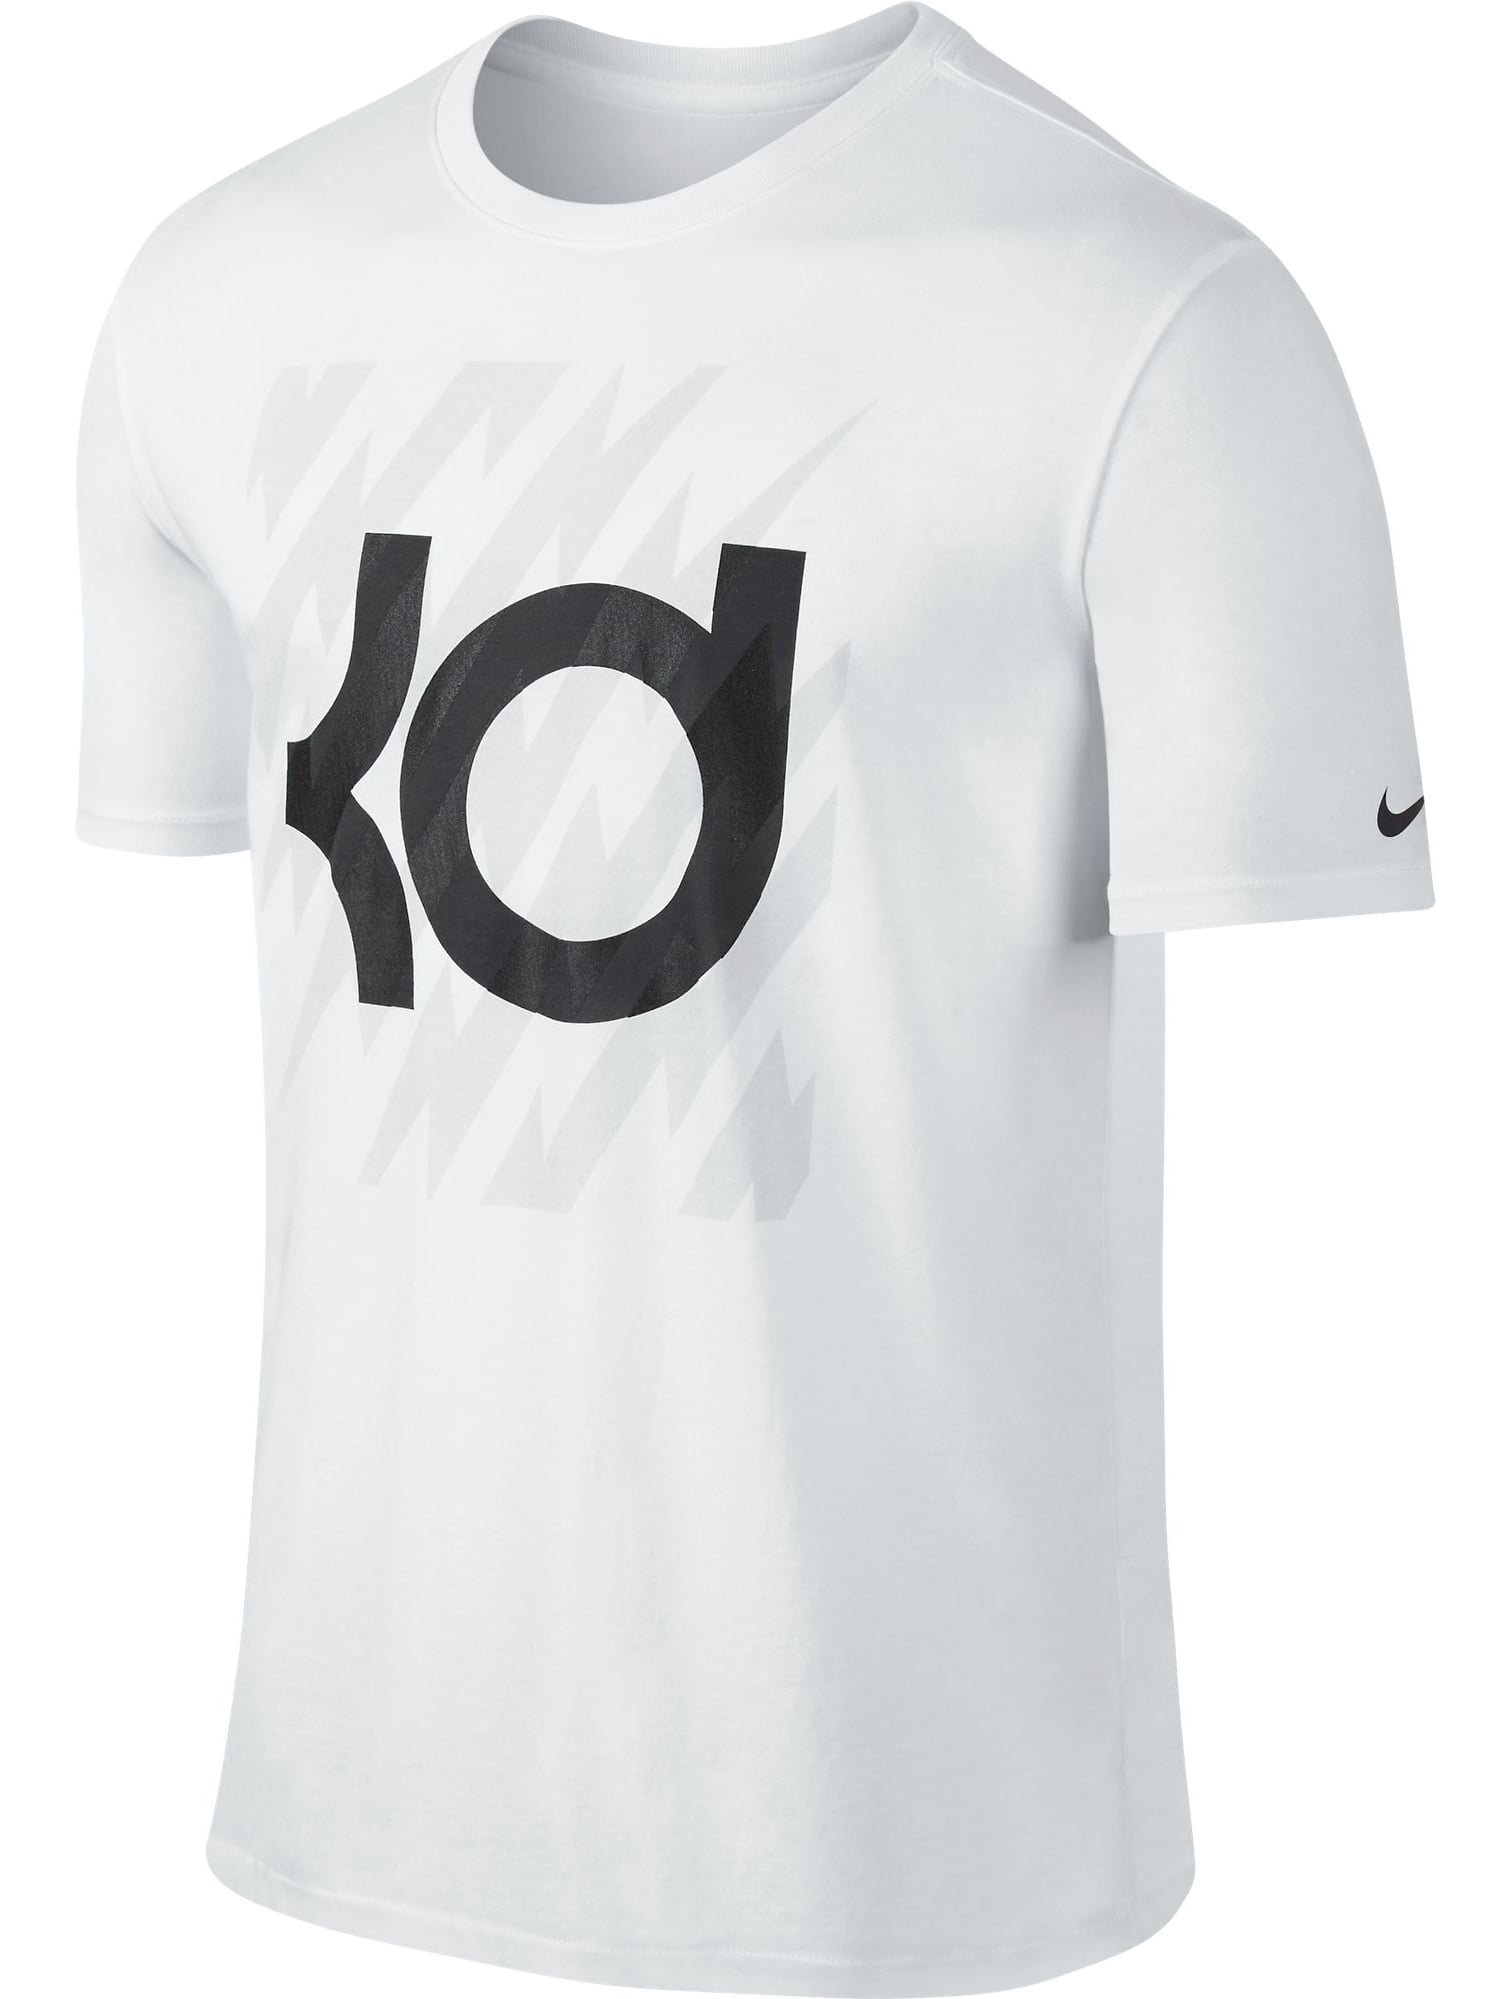 Inminente Inclinado crecimiento Nike KD Kevin Durant Hot Box Men's T-Shirt White/Black/Grey 689025-100 -  Walmart.com